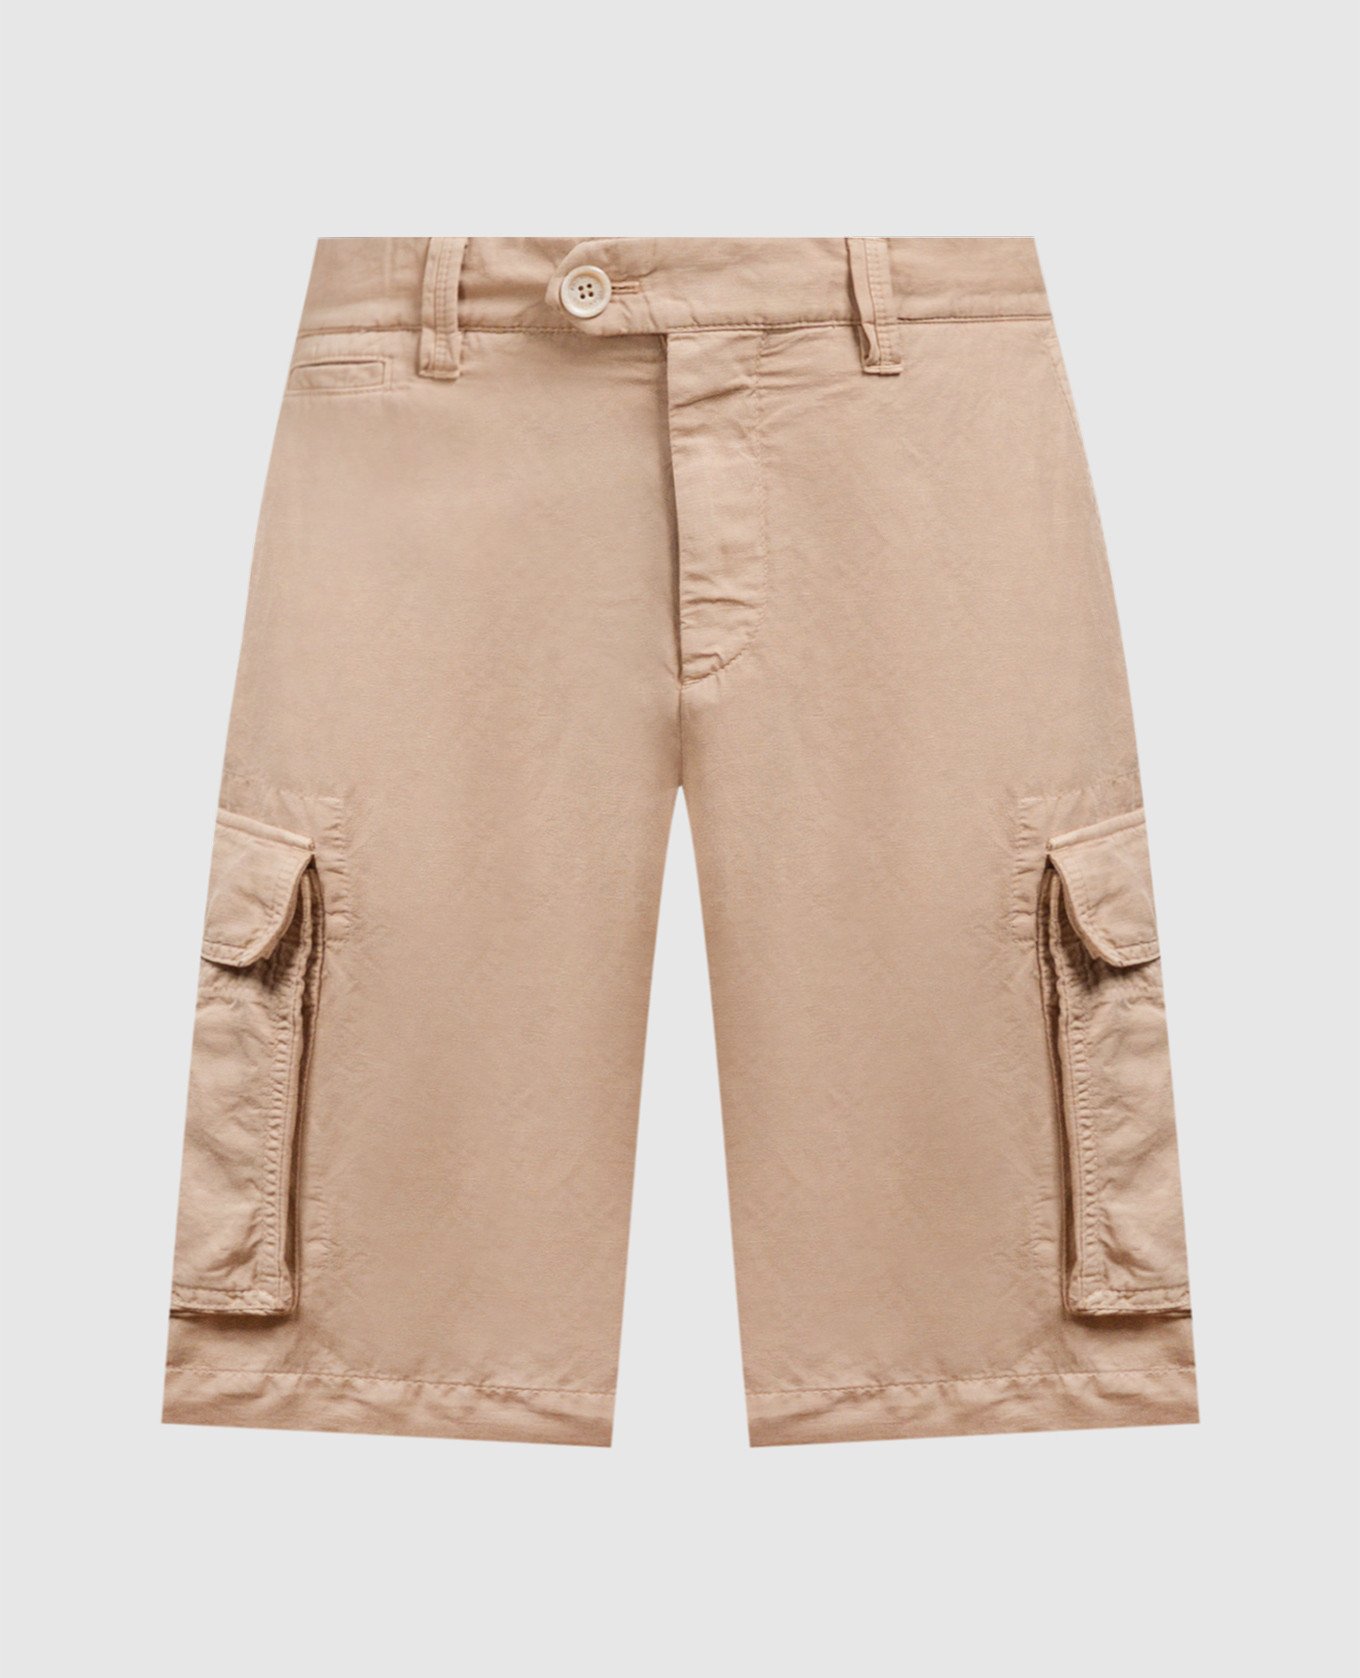 Beige linen cargo shorts